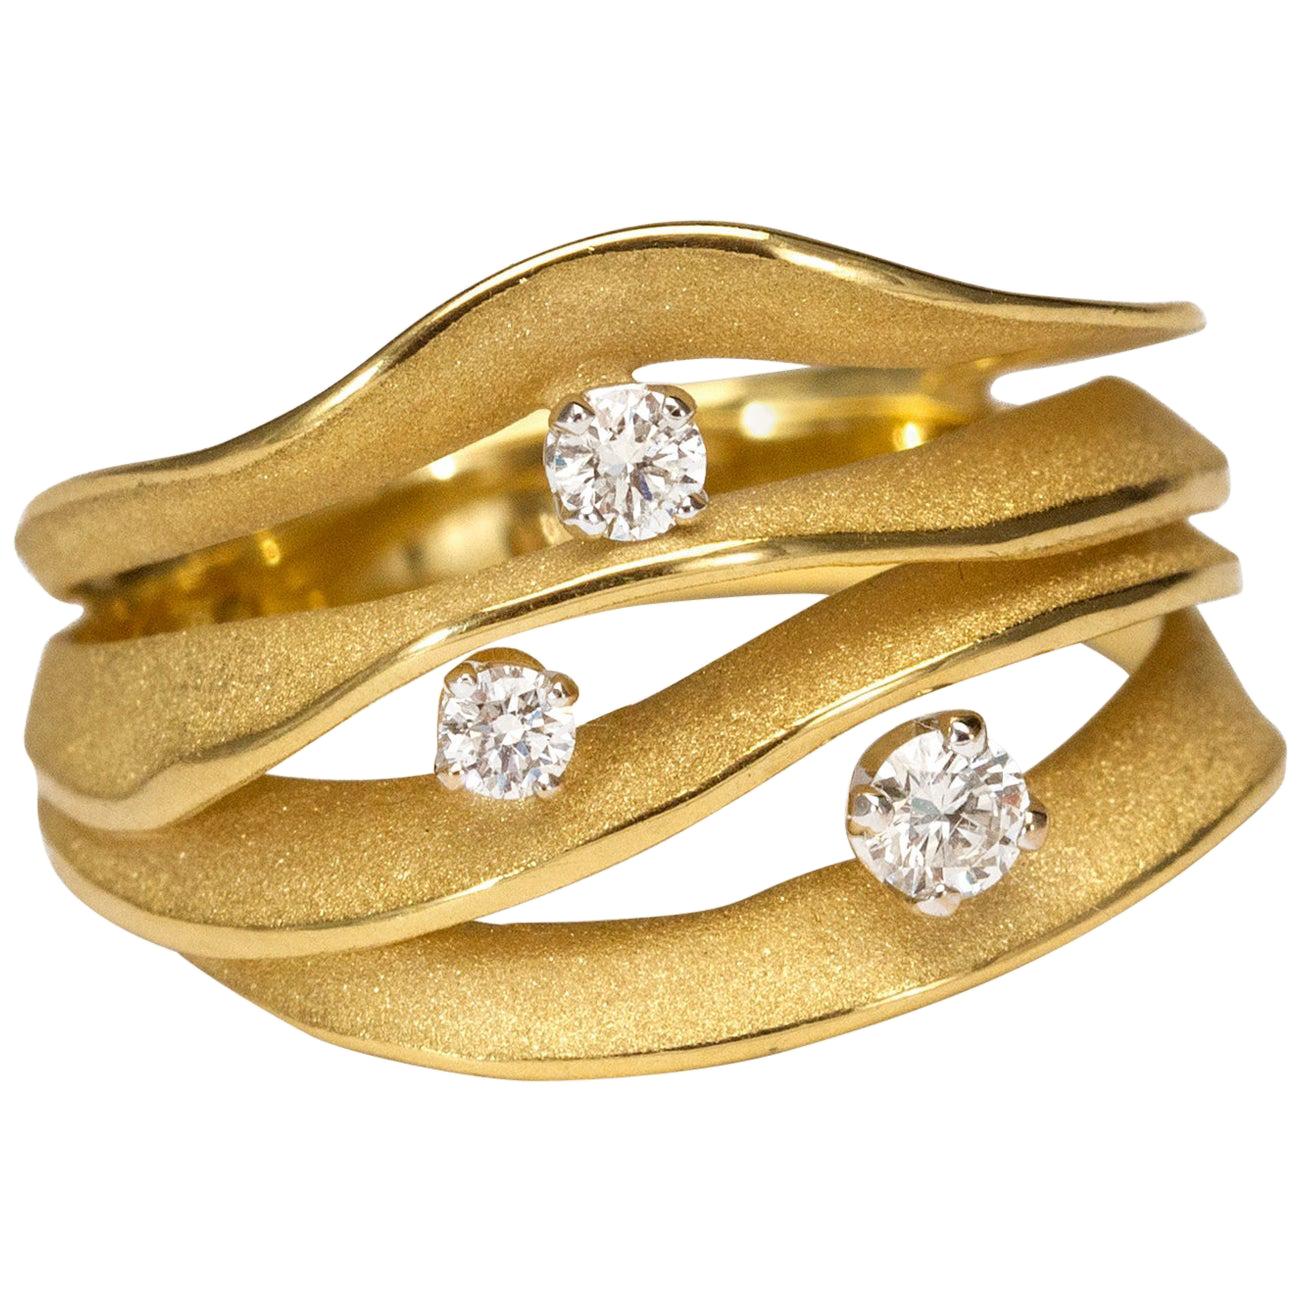 For Sale:  Annamaria Cammilli "Dune Royal" Ring with Diamonds in 18 Karat Lemon Bamboo